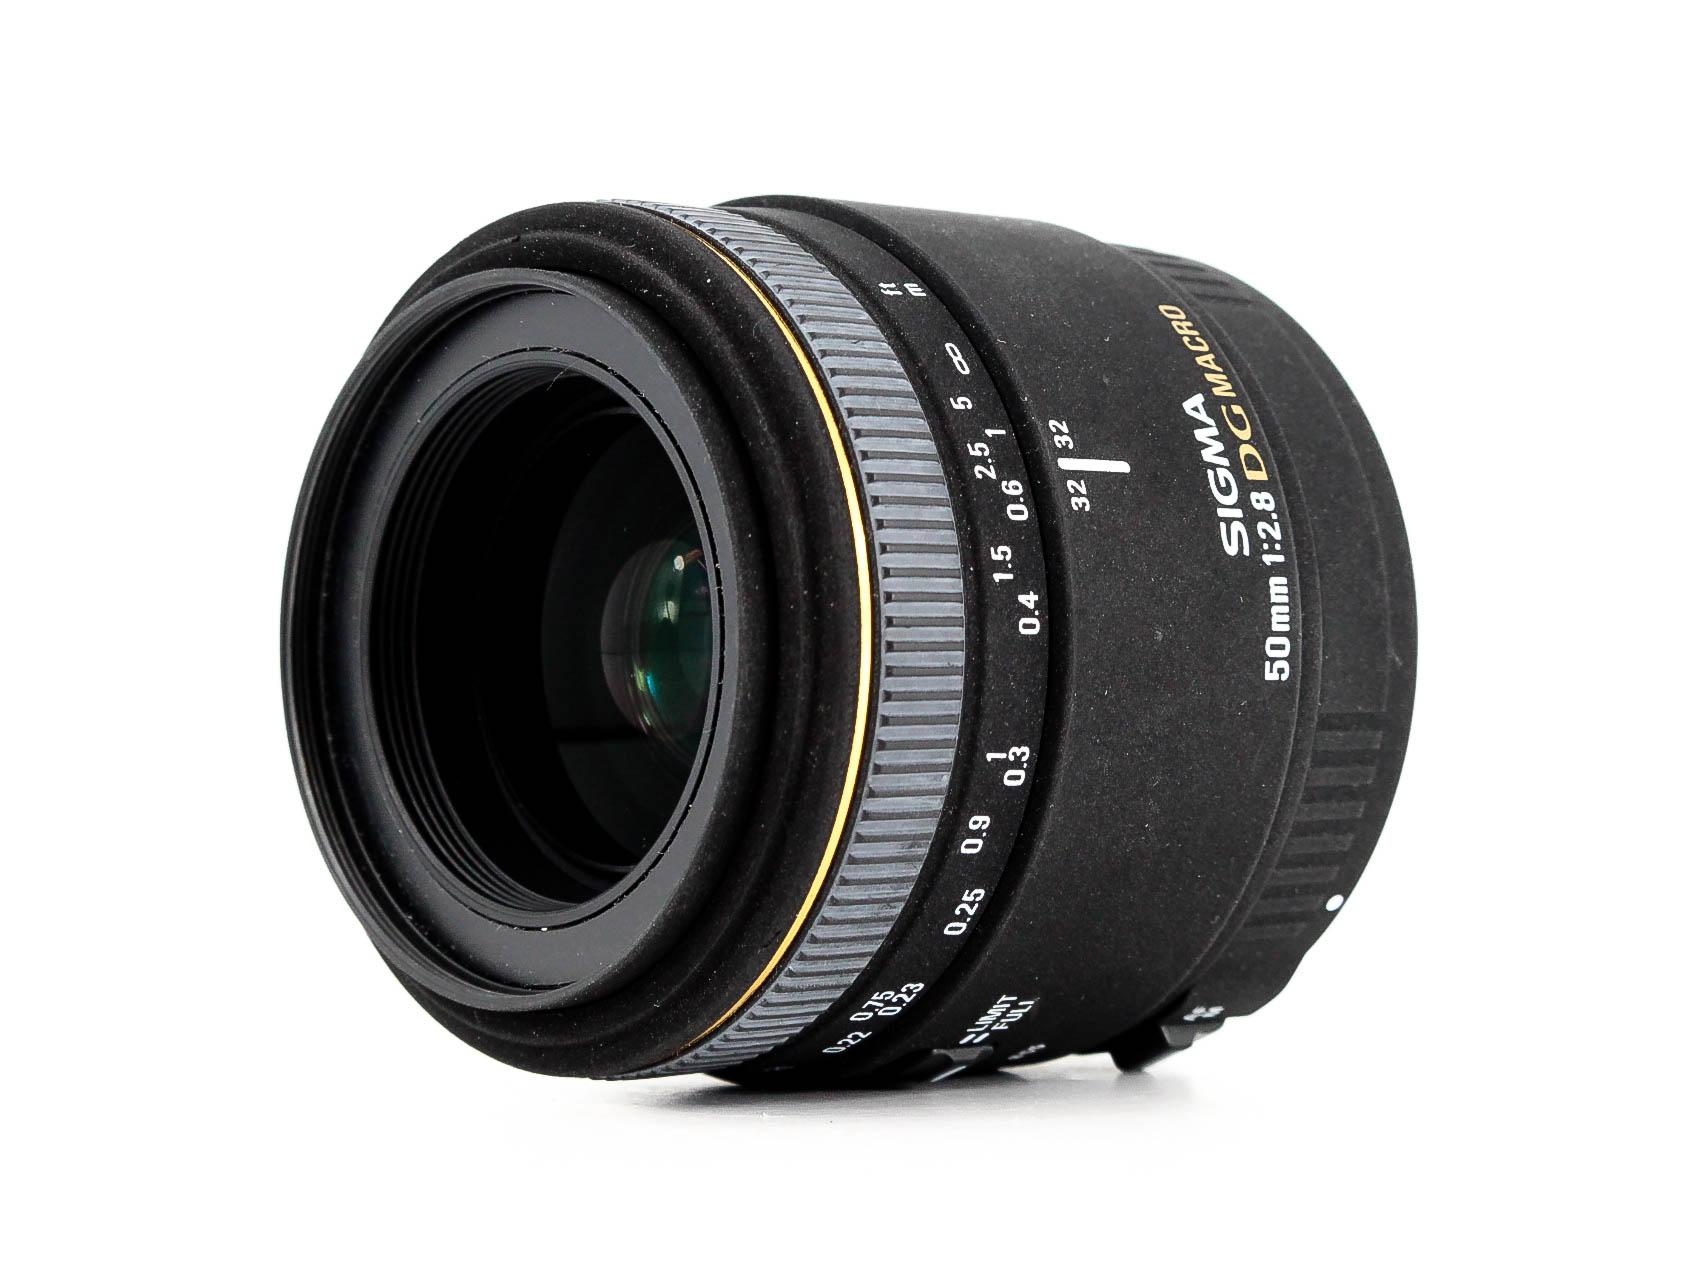 Sigma 50mm f/2.8 EX DG Macro Canon EF Fit Lens - Lenses and Cameras